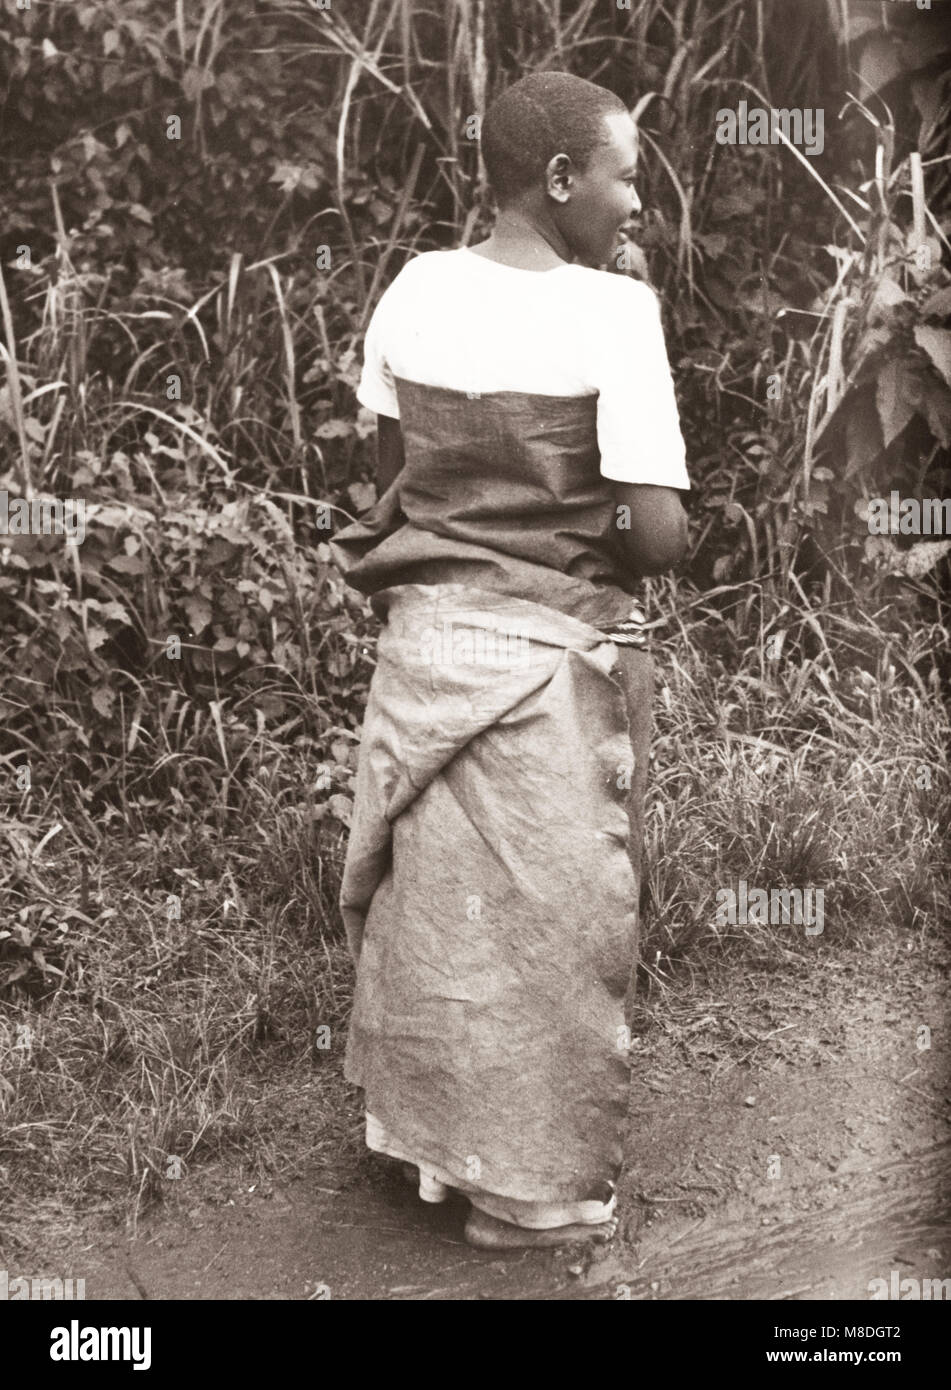 1940s East Africa - Uganda - Baganda woman in a traditional bark cloth or barkcloth dress Stock Photo